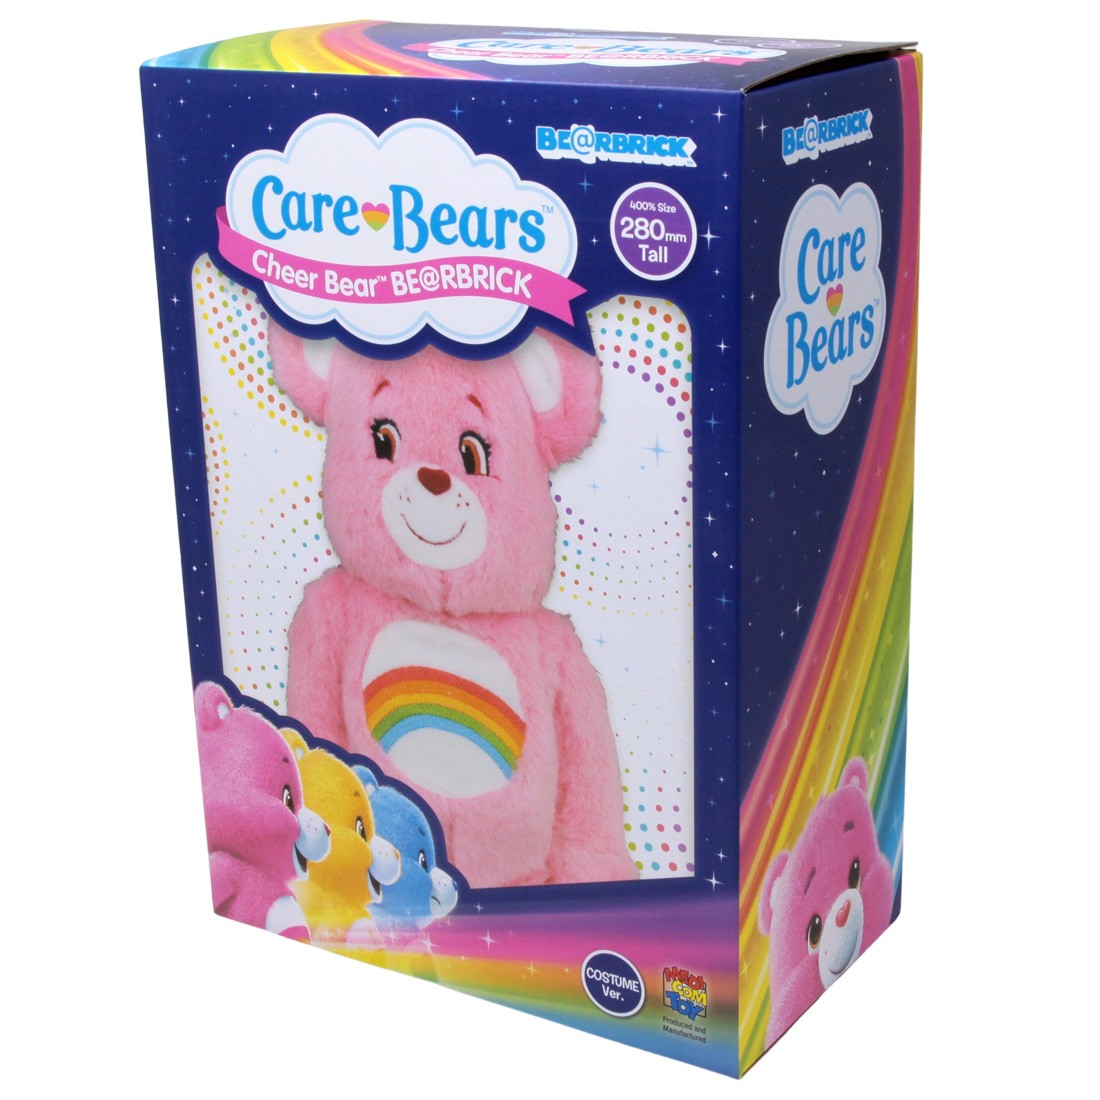 Medicom Care Bears Cheer Bear Costume Ver. 400% Bearbrick Figure (pink)